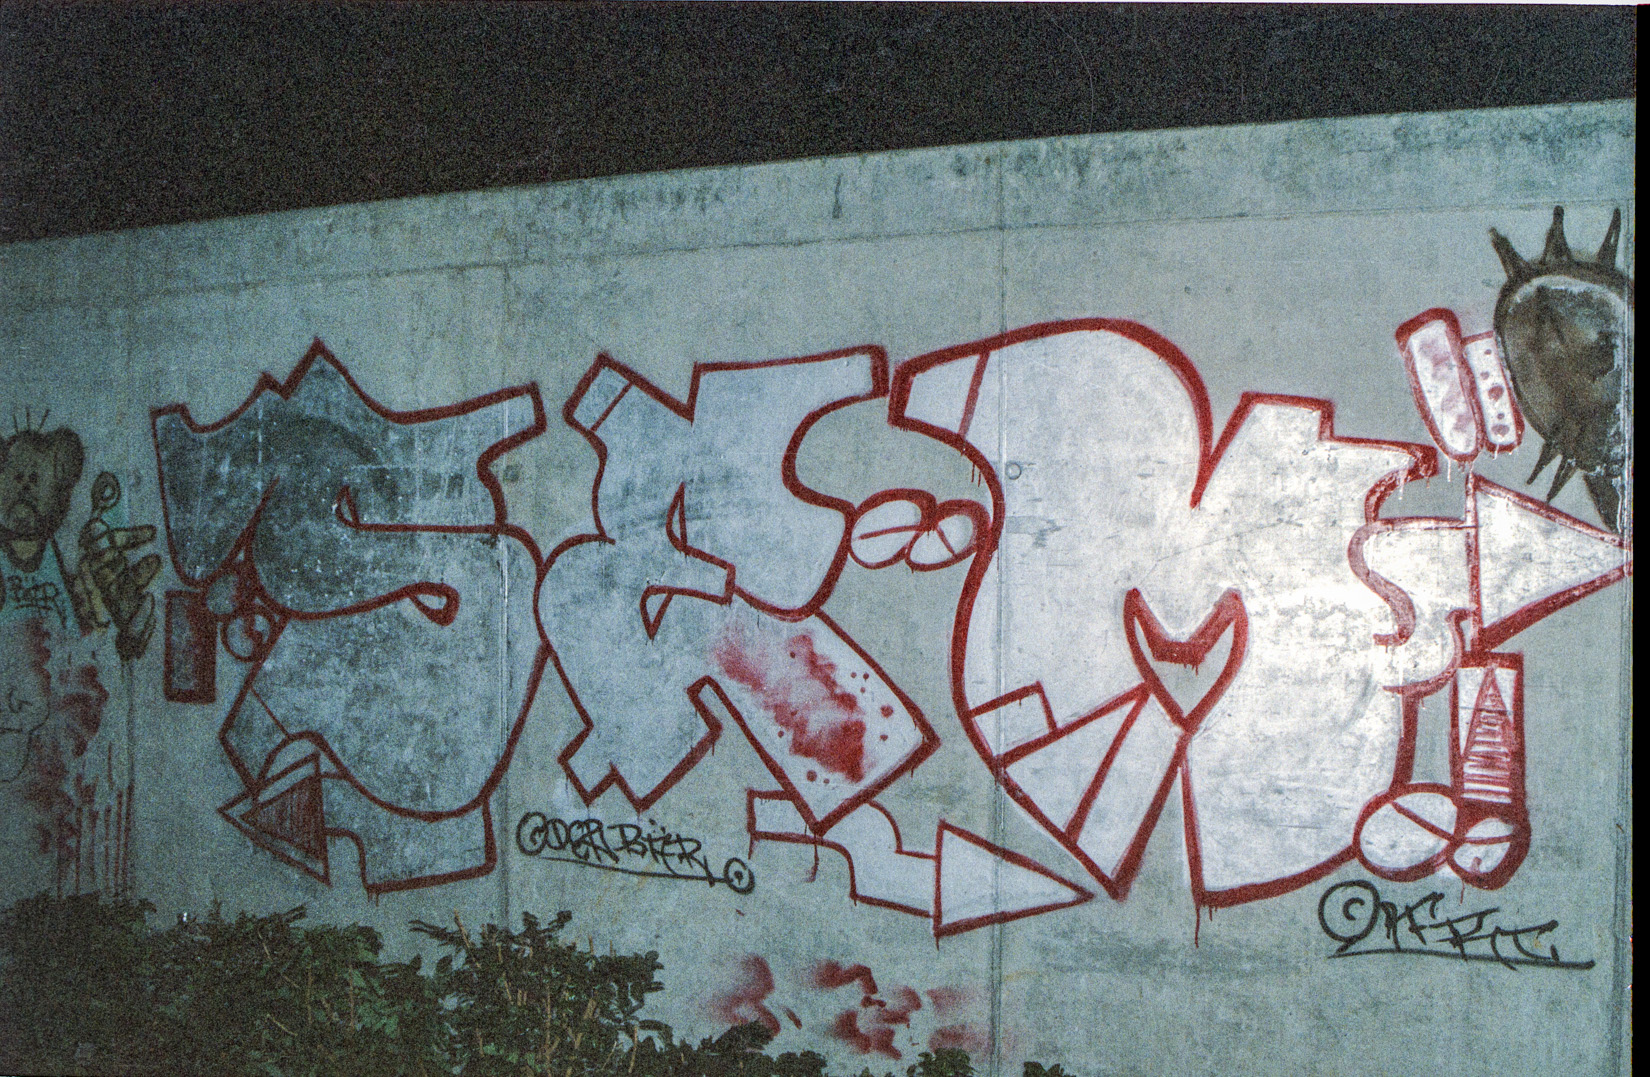 Frankfurt_Graffiti_1988_1989_H88_FRC (23 von 25)